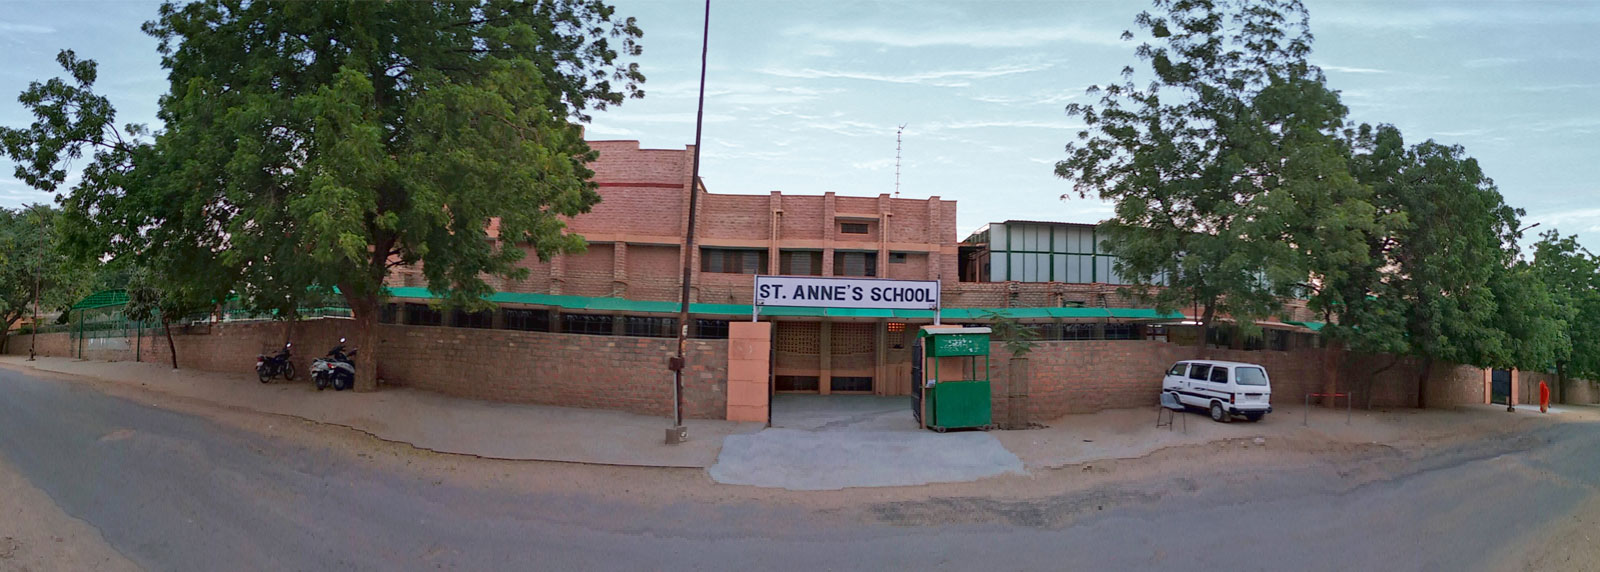 St. Annes School Education | Schools